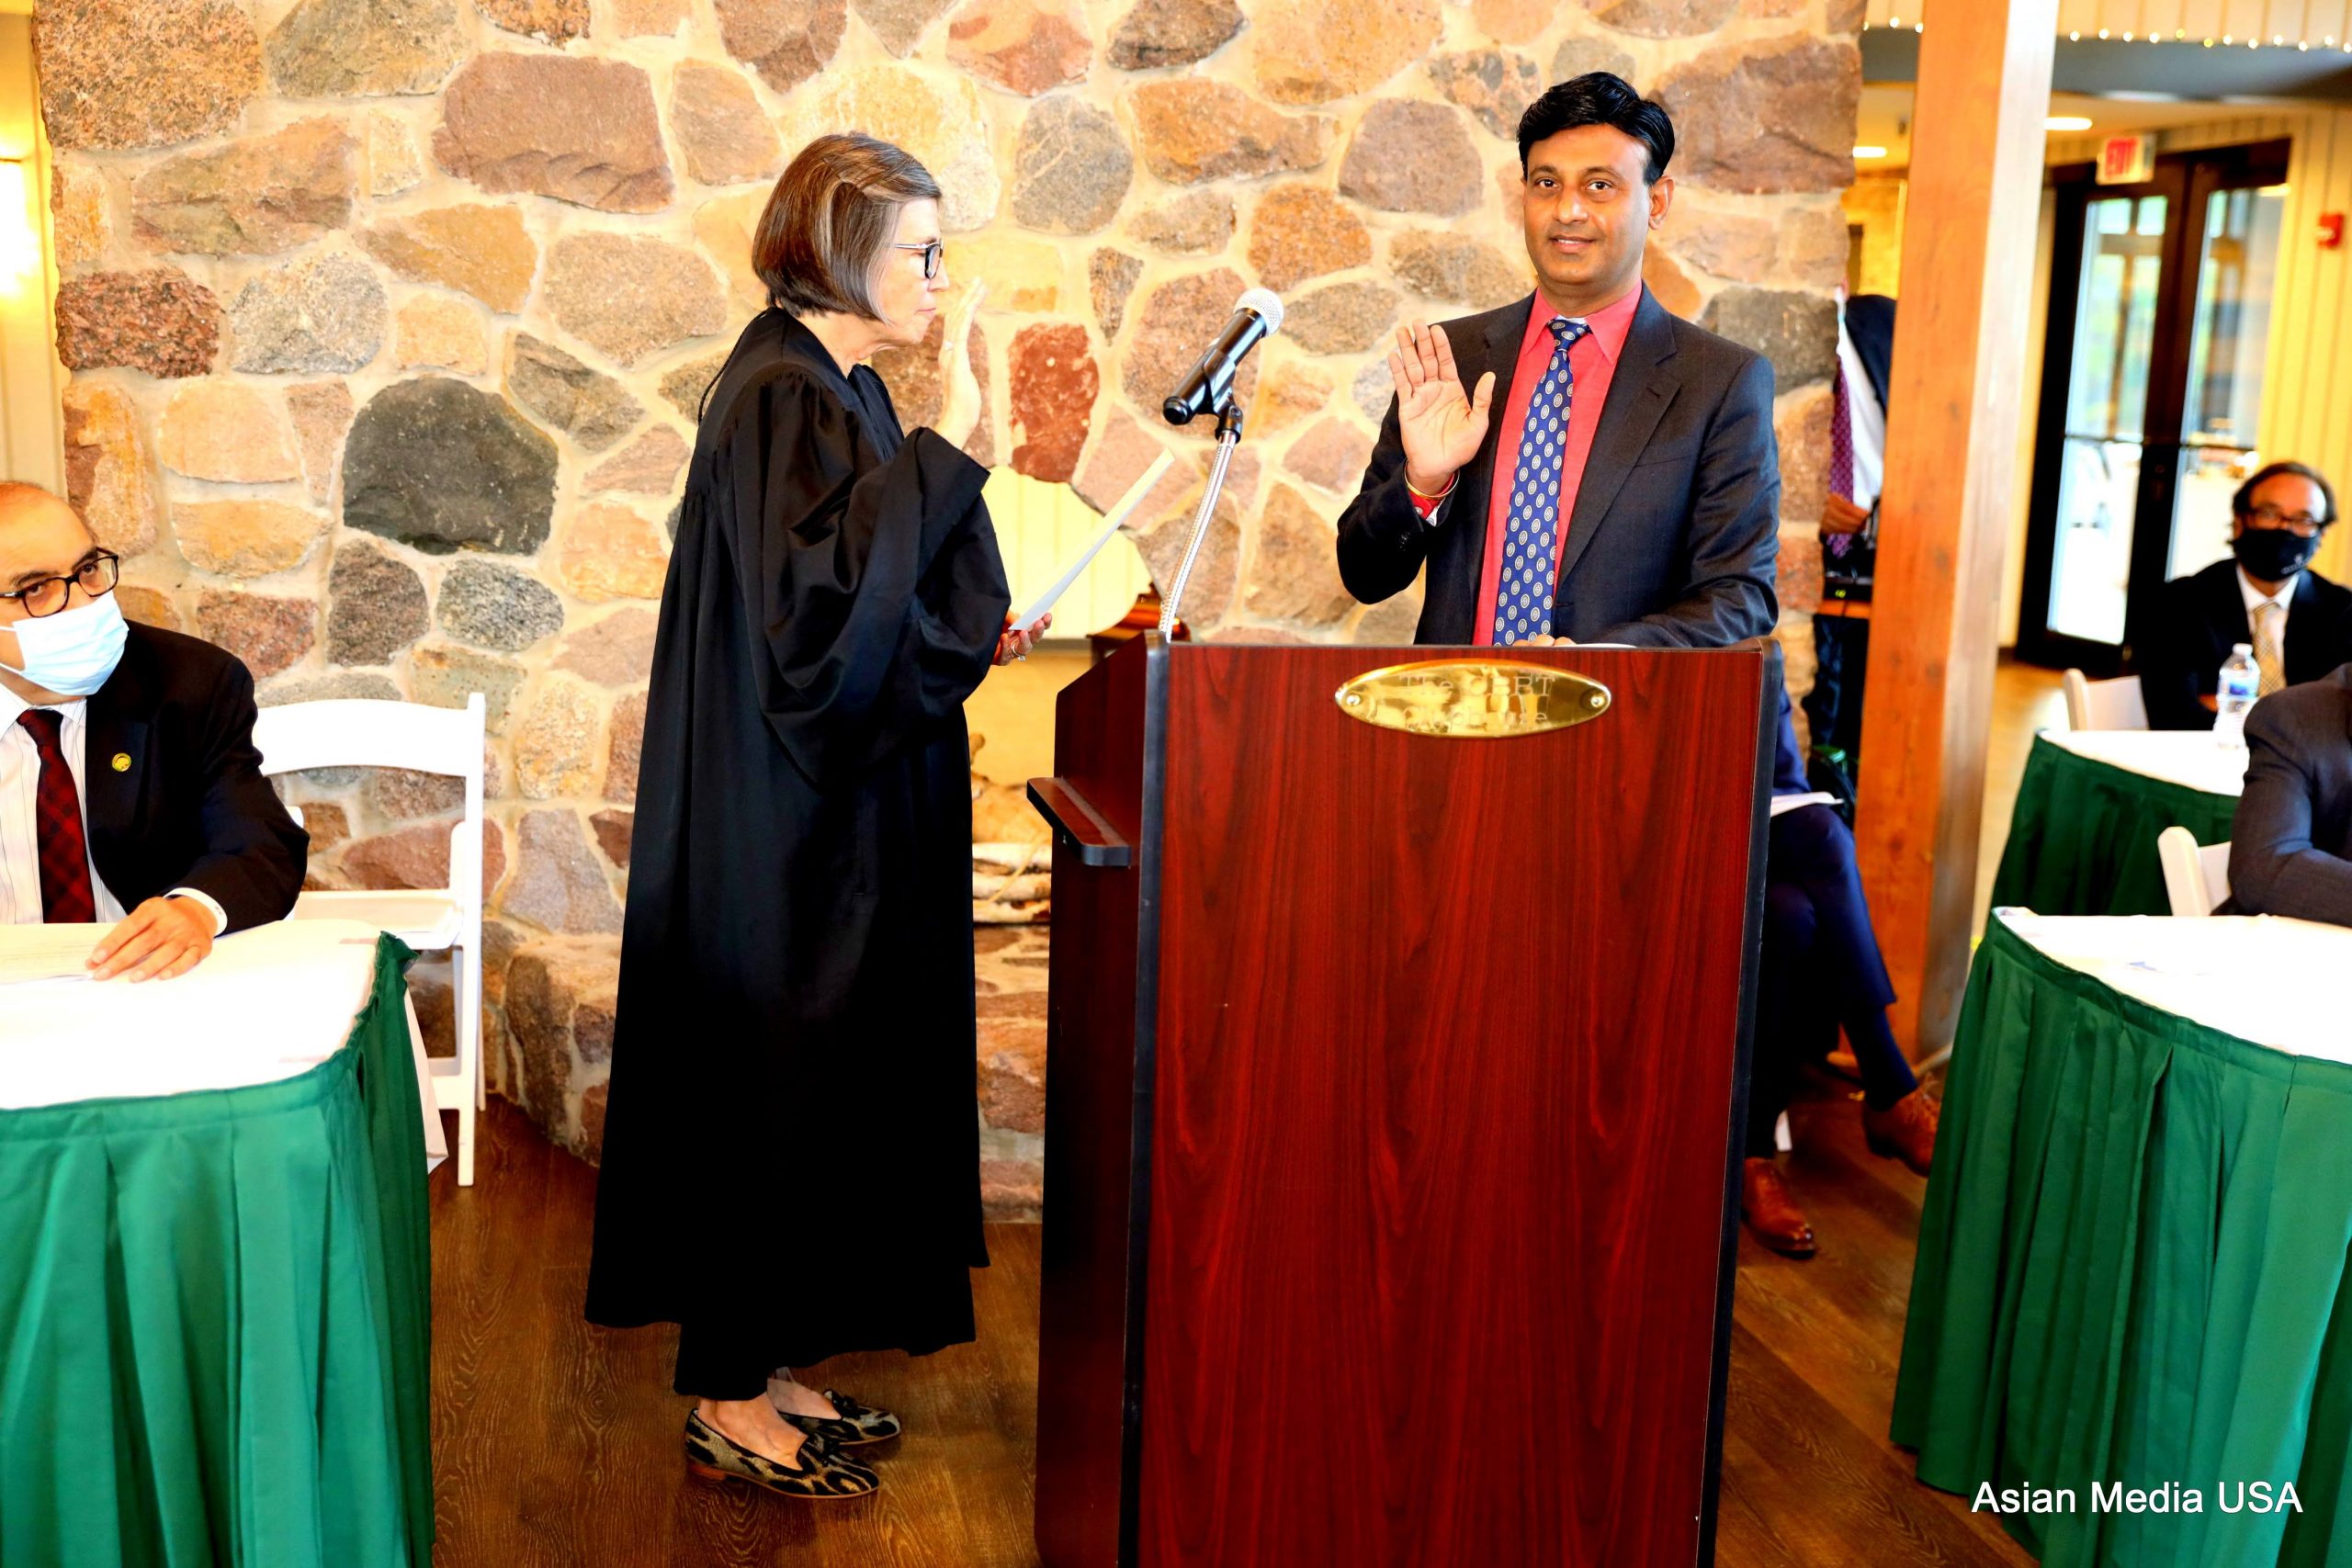 Dr. Suresh Reddy Officially Sworn-in As Trustee Of Oak Brook, IL